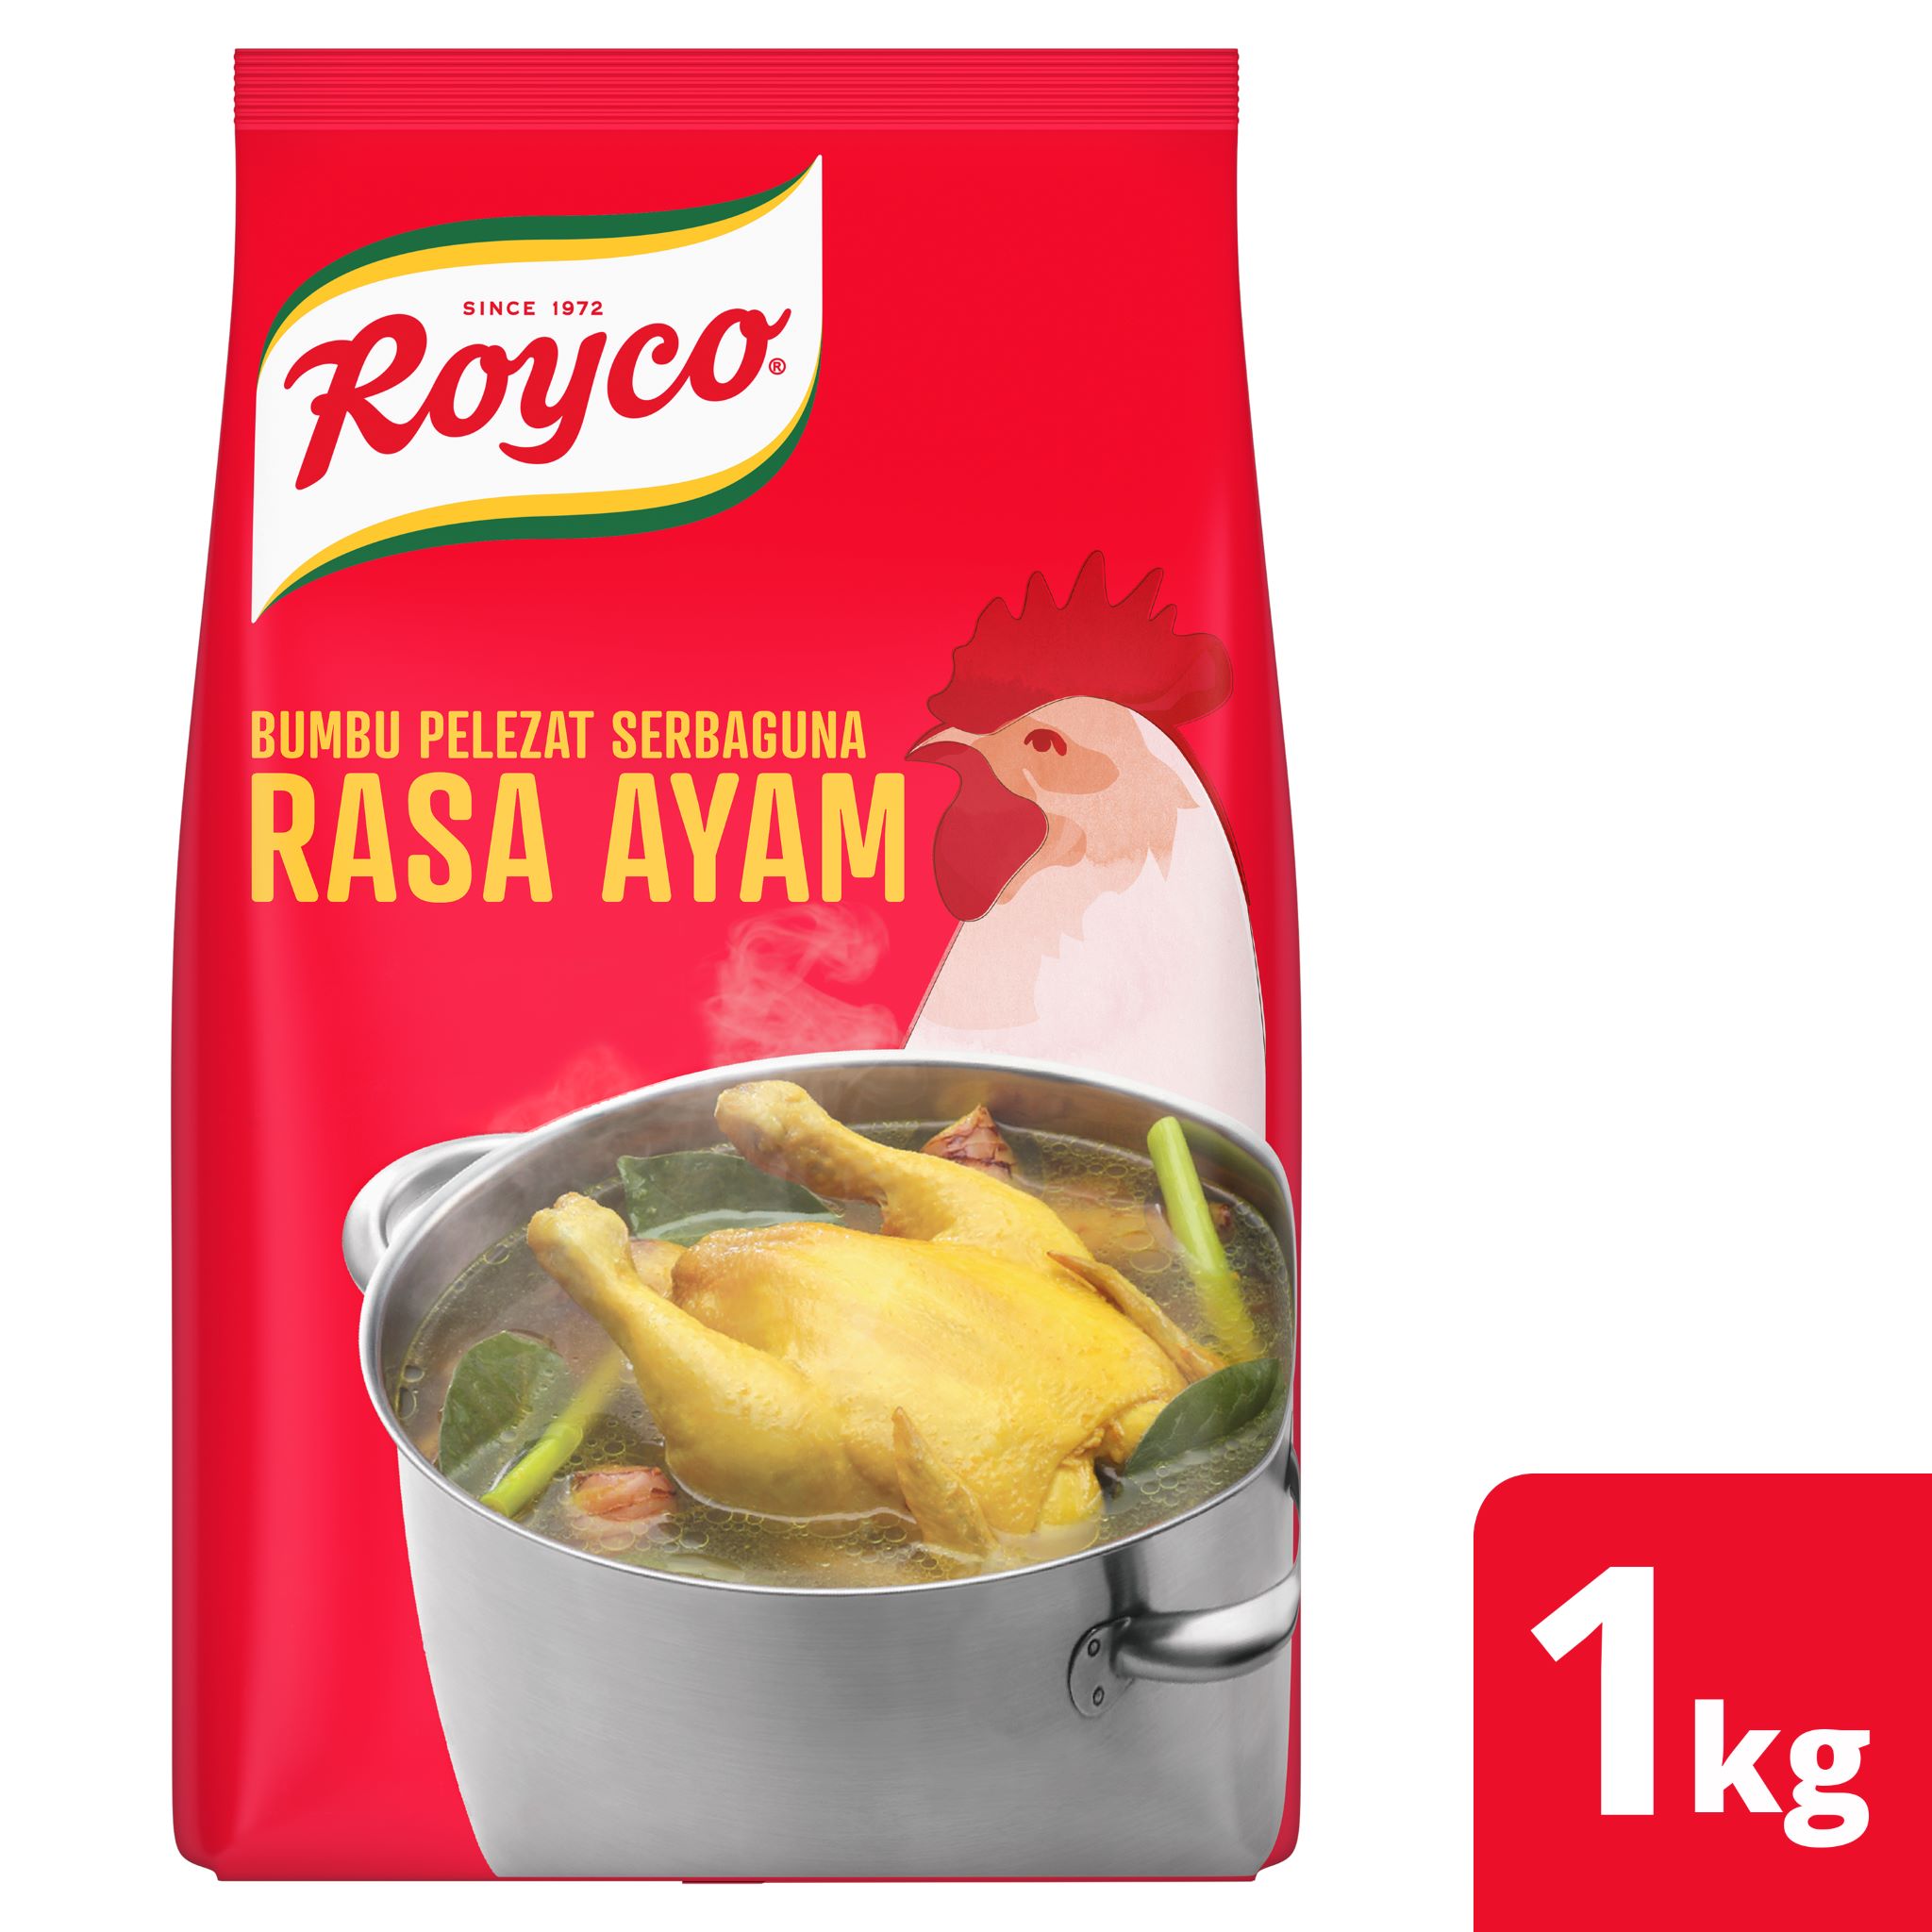 Royco Bumbu Rasa Ayam 1kg - Penyedap khas Indonesia untuk hasilkan masakan dengan citarasa gurih & rasa daging yang mantap!